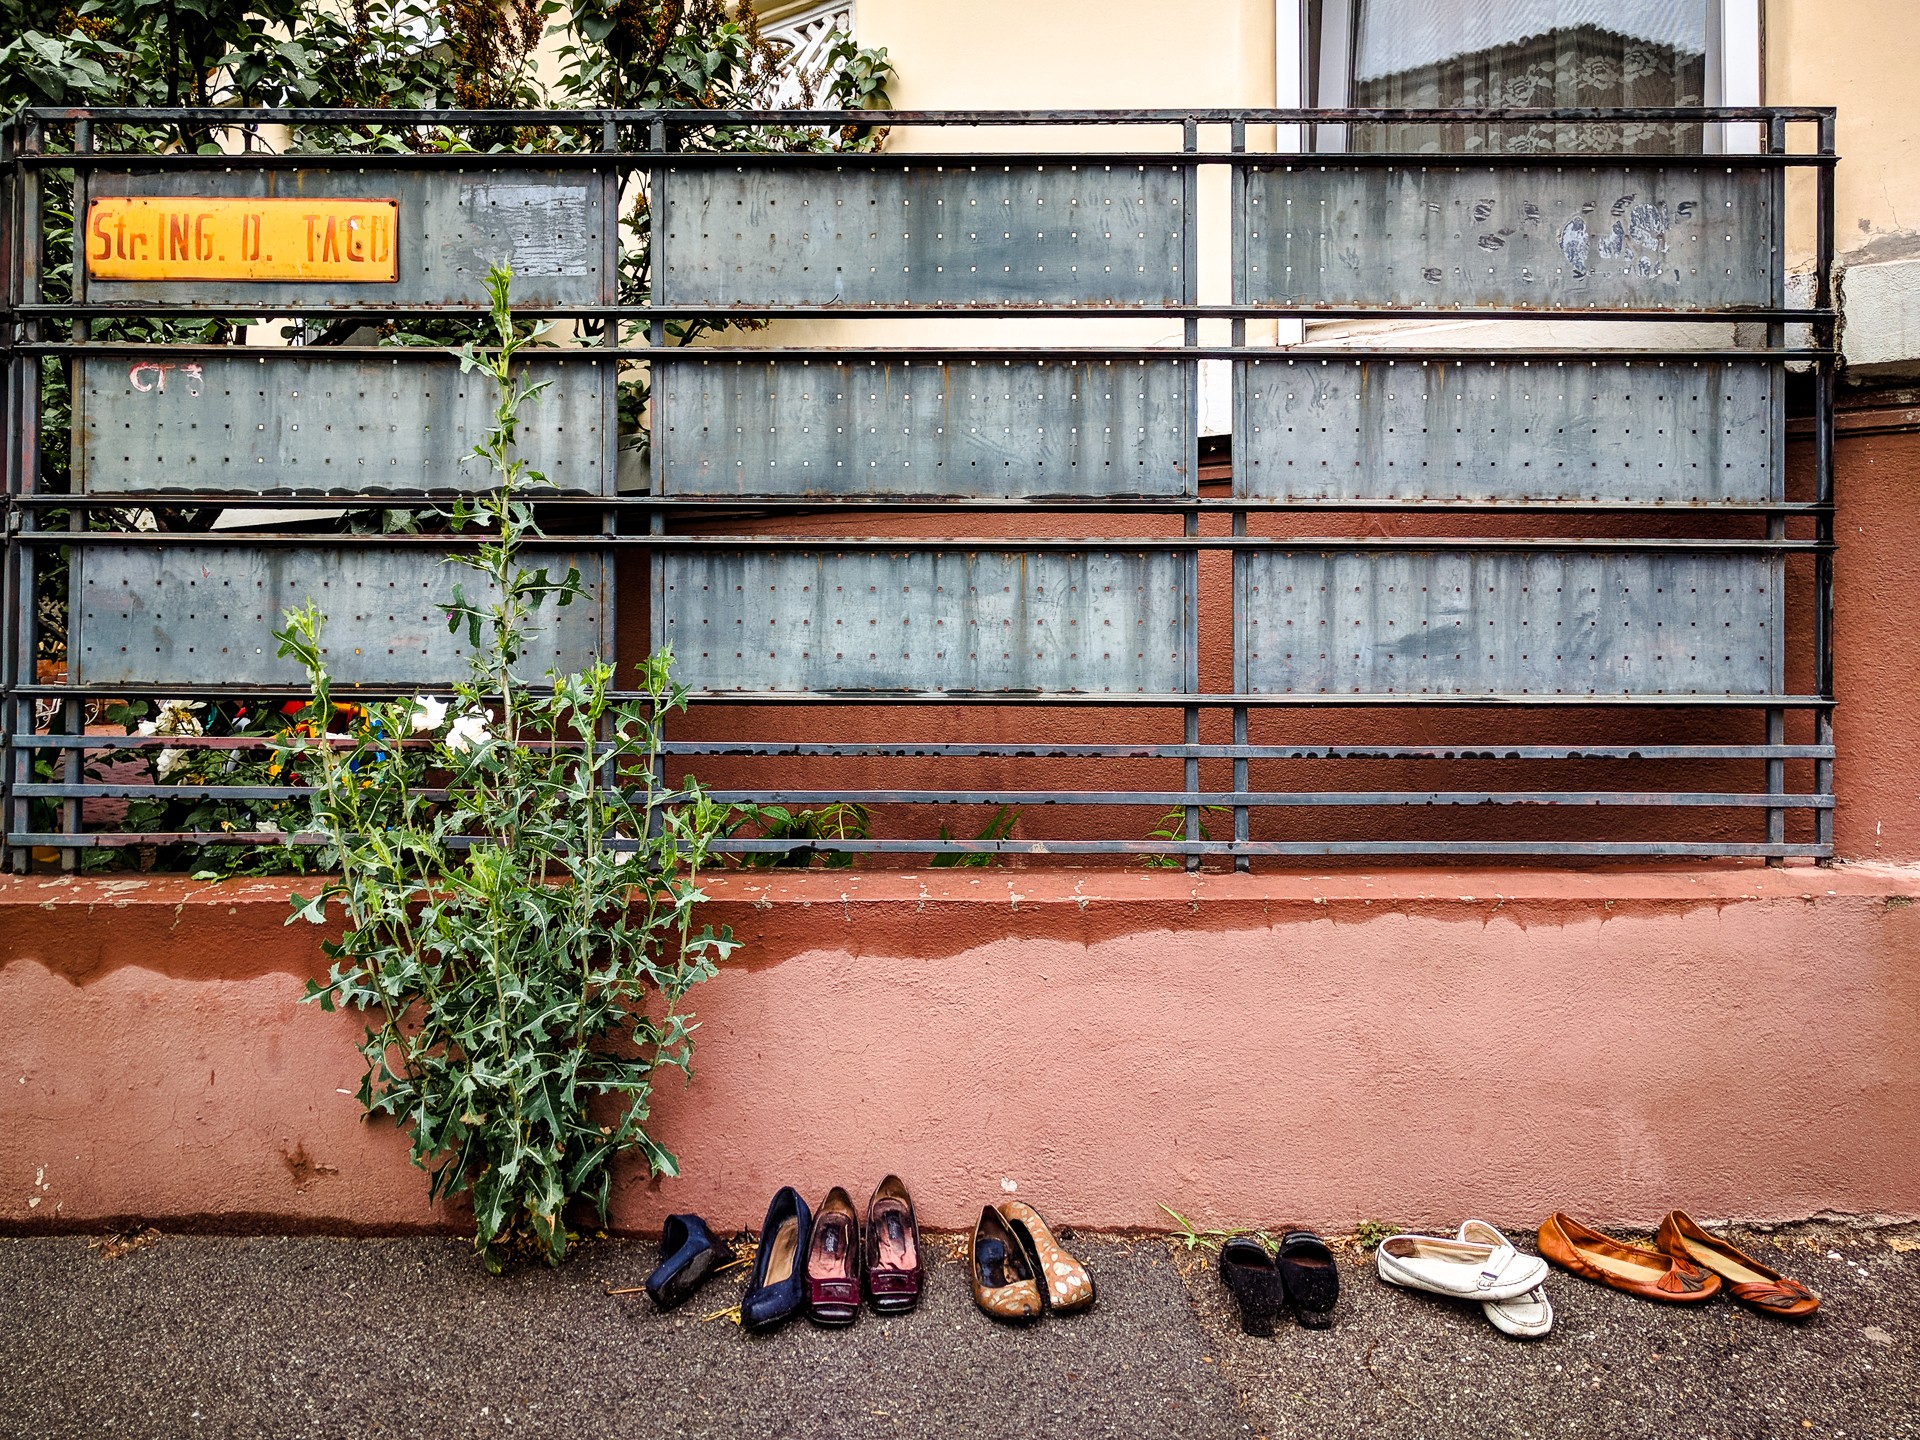 Pantofi abandonați - Strada Dimitrie Tacu